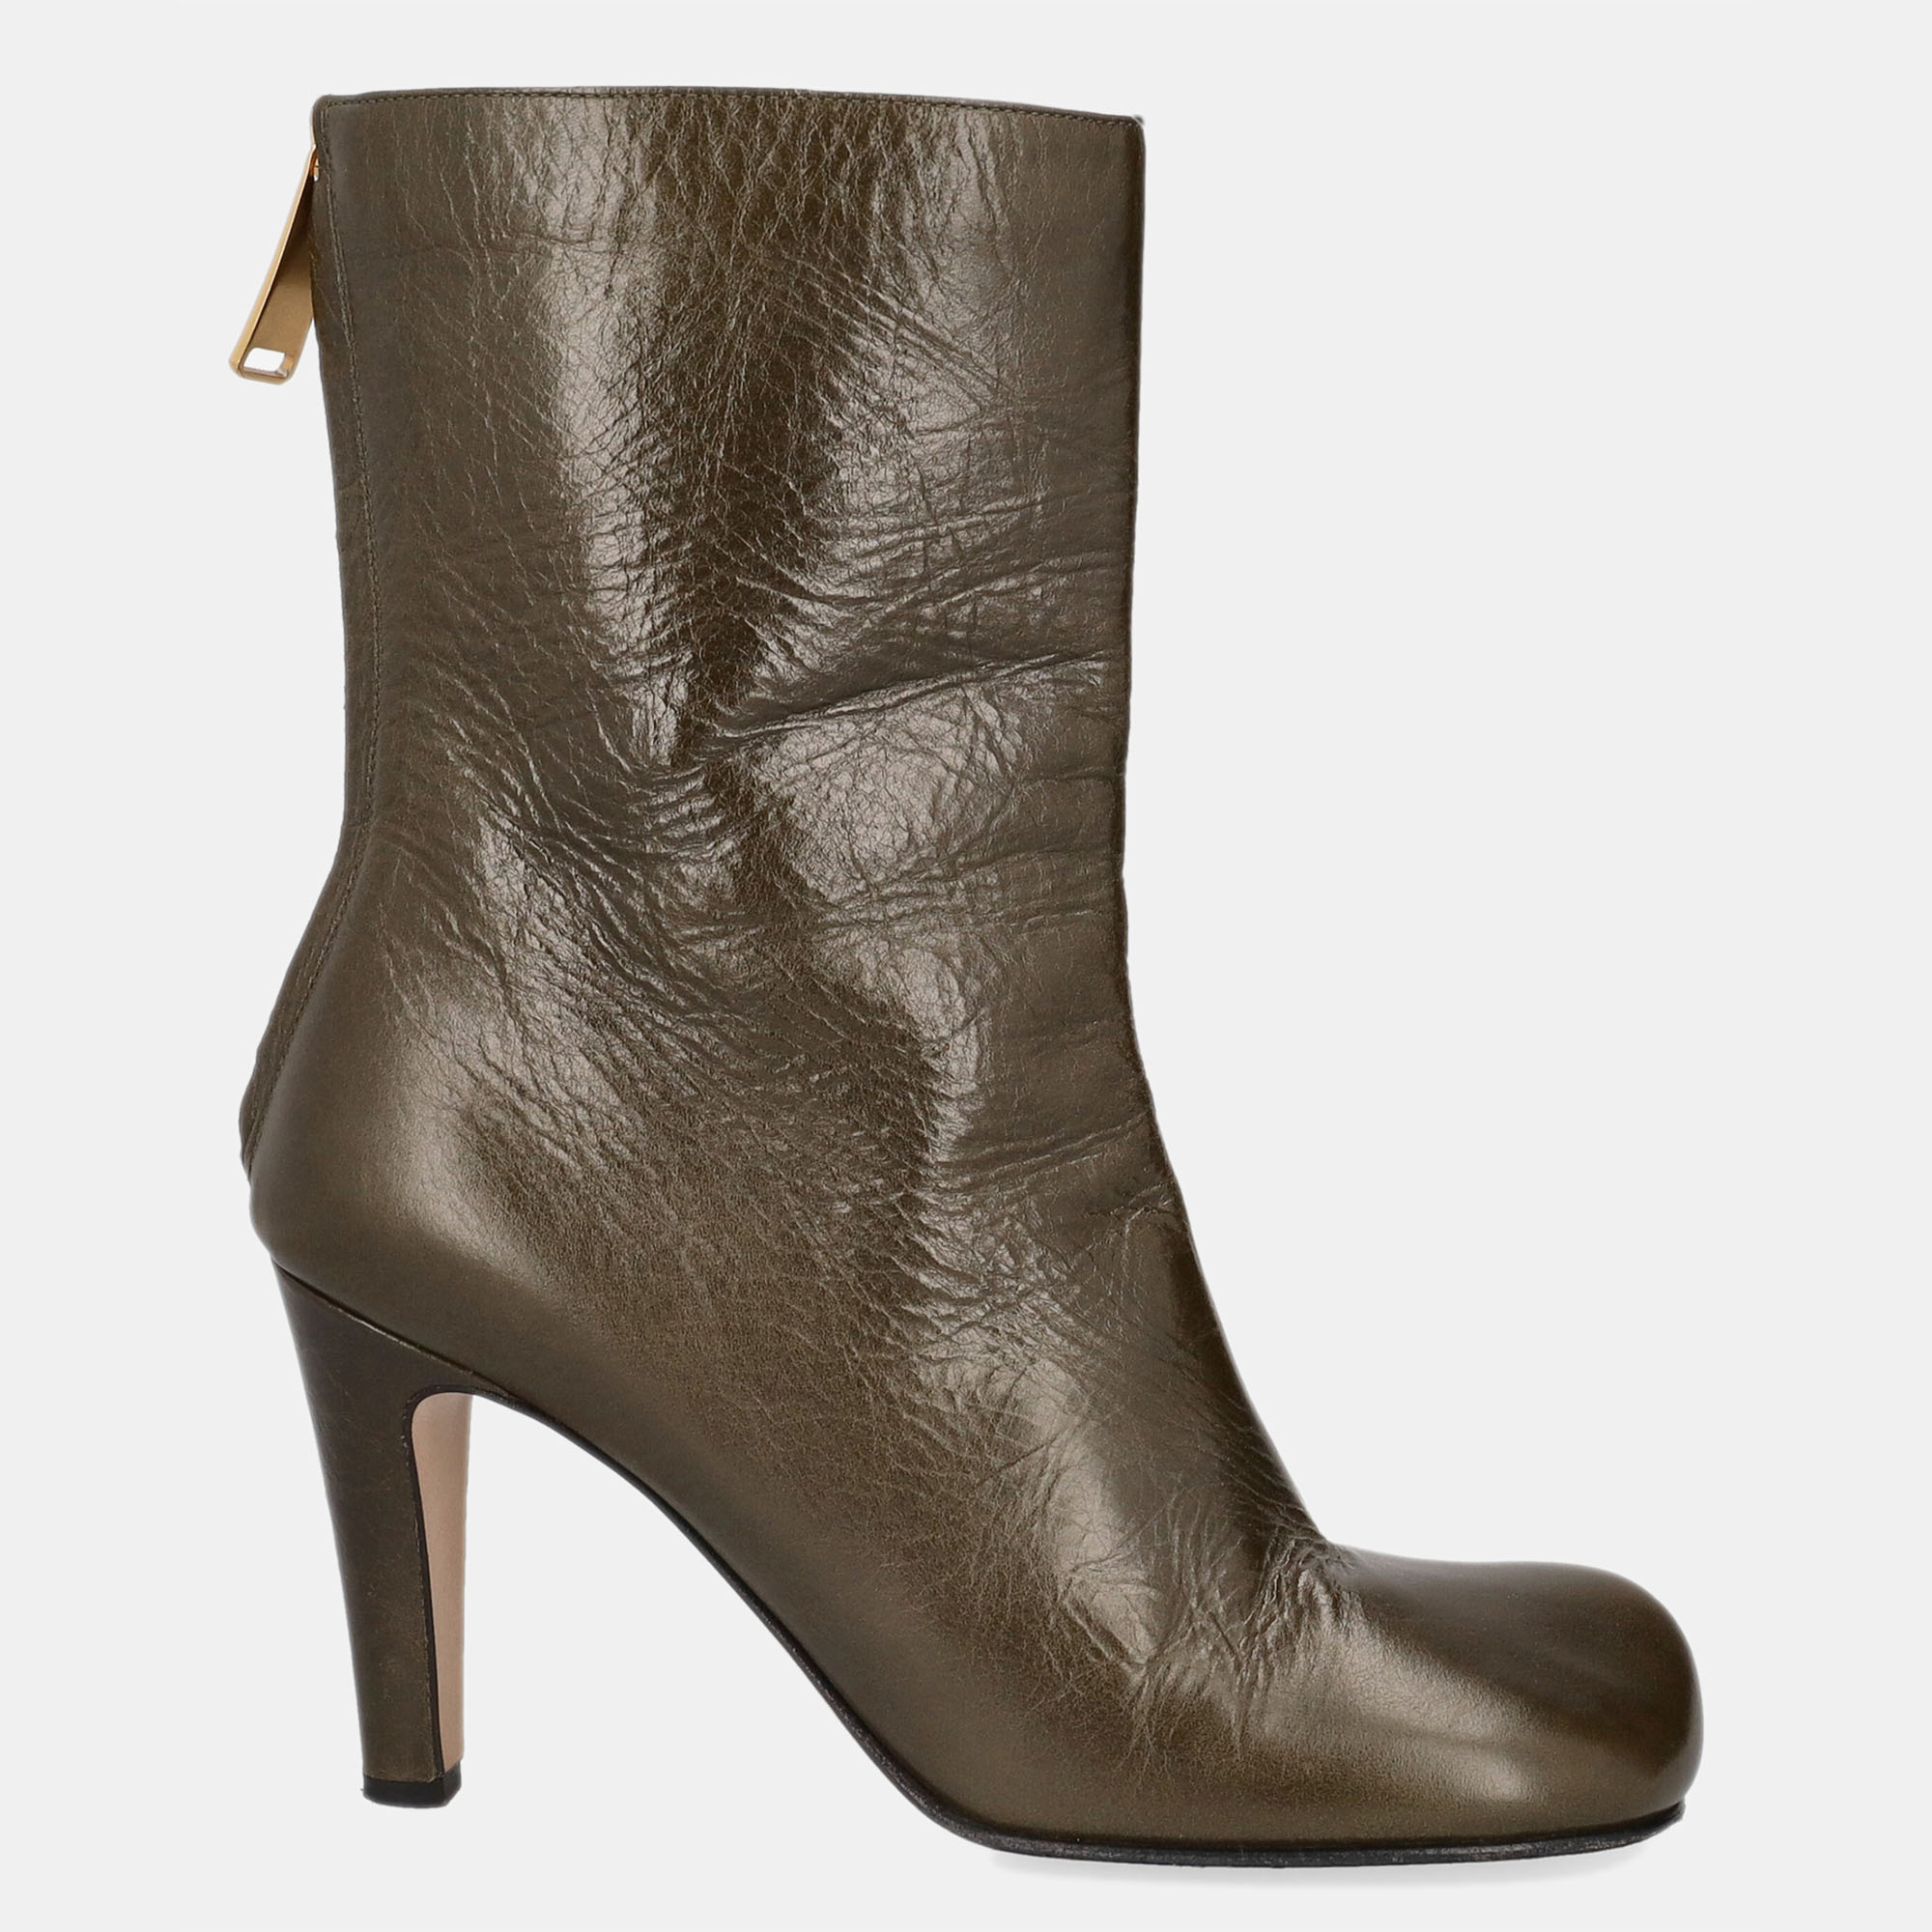 Bottega Veneta  Women's Leather Ankle Boots - Green - EU 39